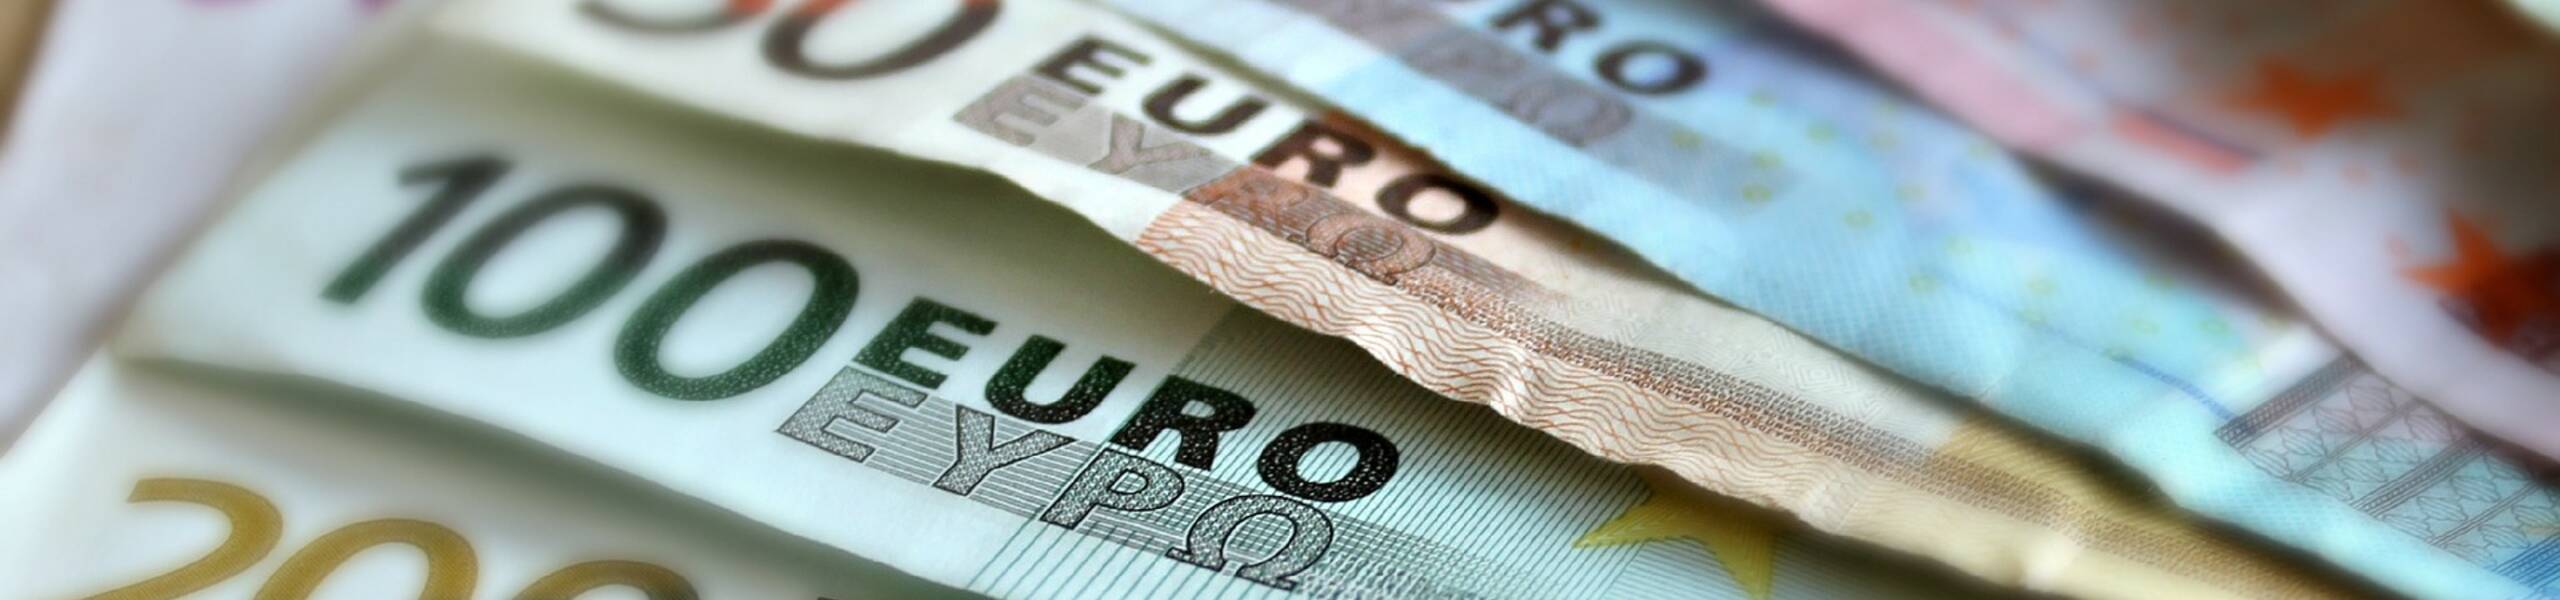 EUR/GBP : ยังอยู่ในทิศทางเทรนด์ขาขึ้นระยะสั้น